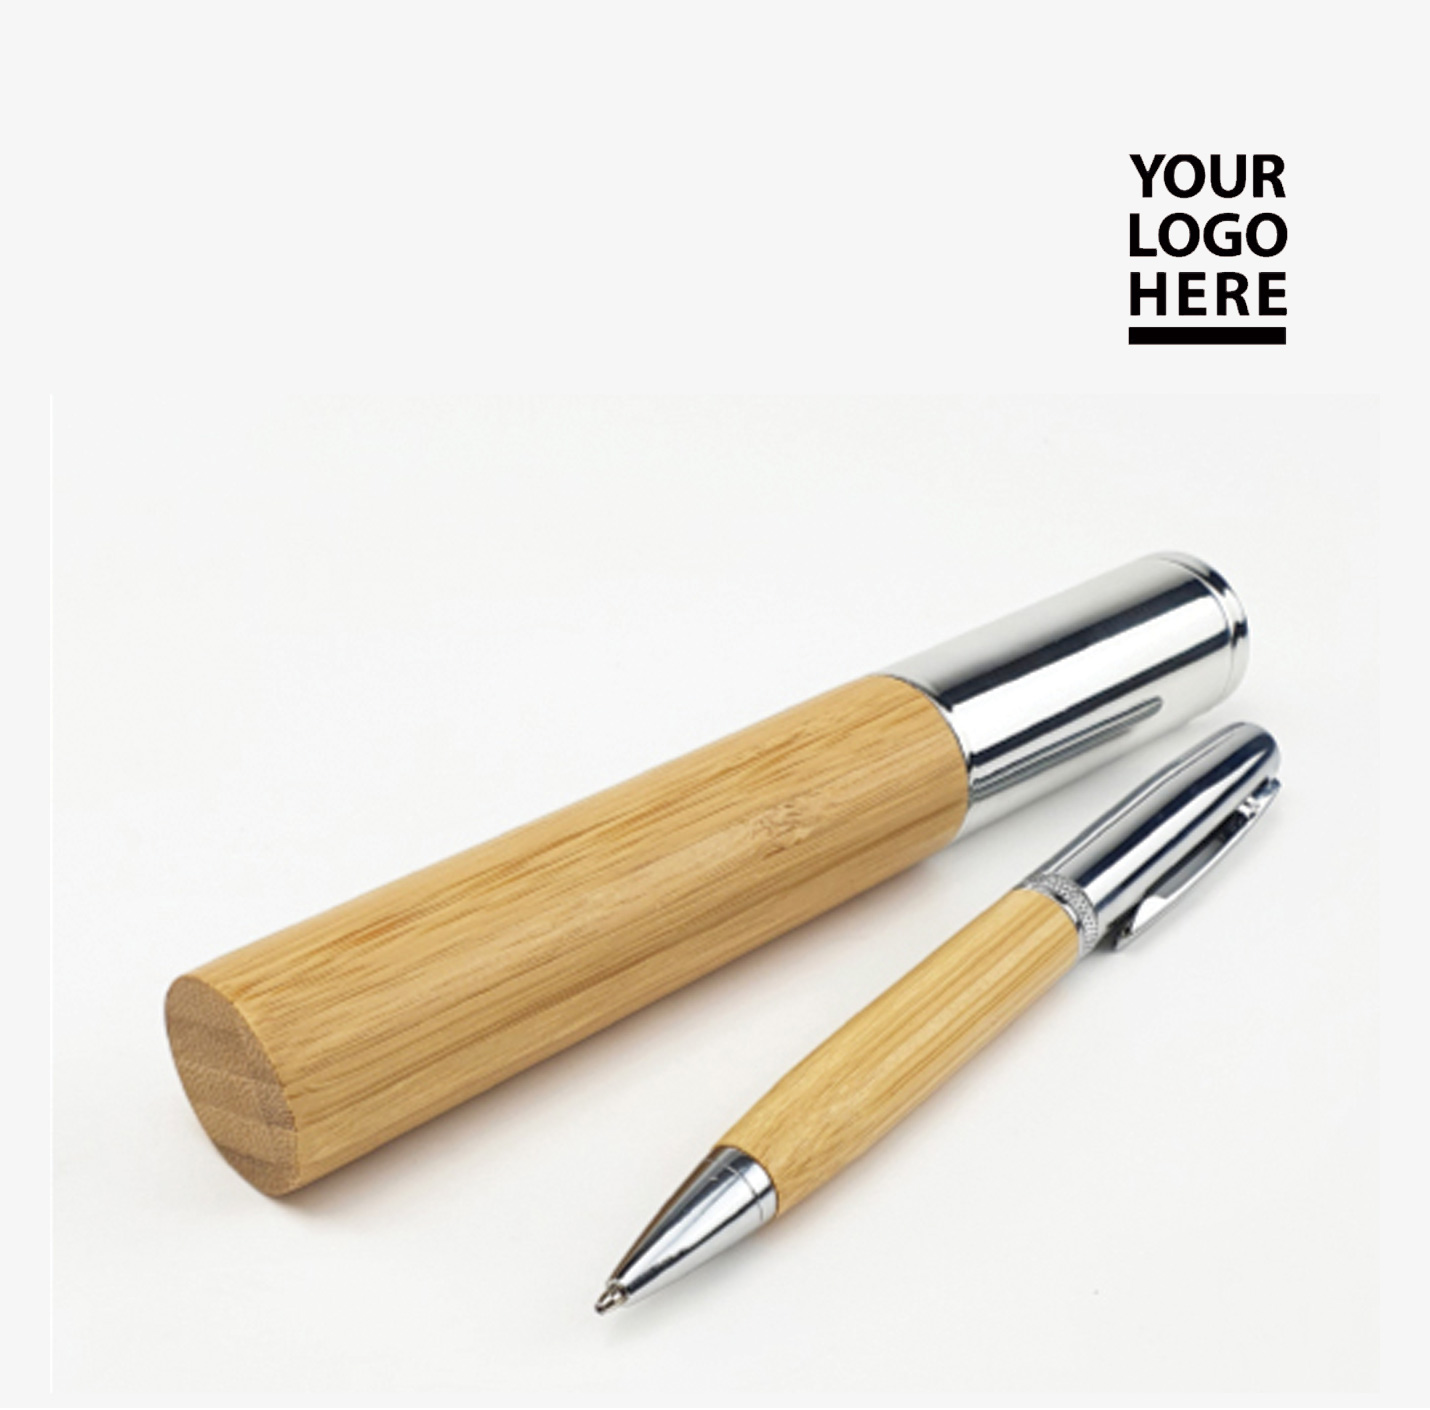 Metal and Bamboo Pens